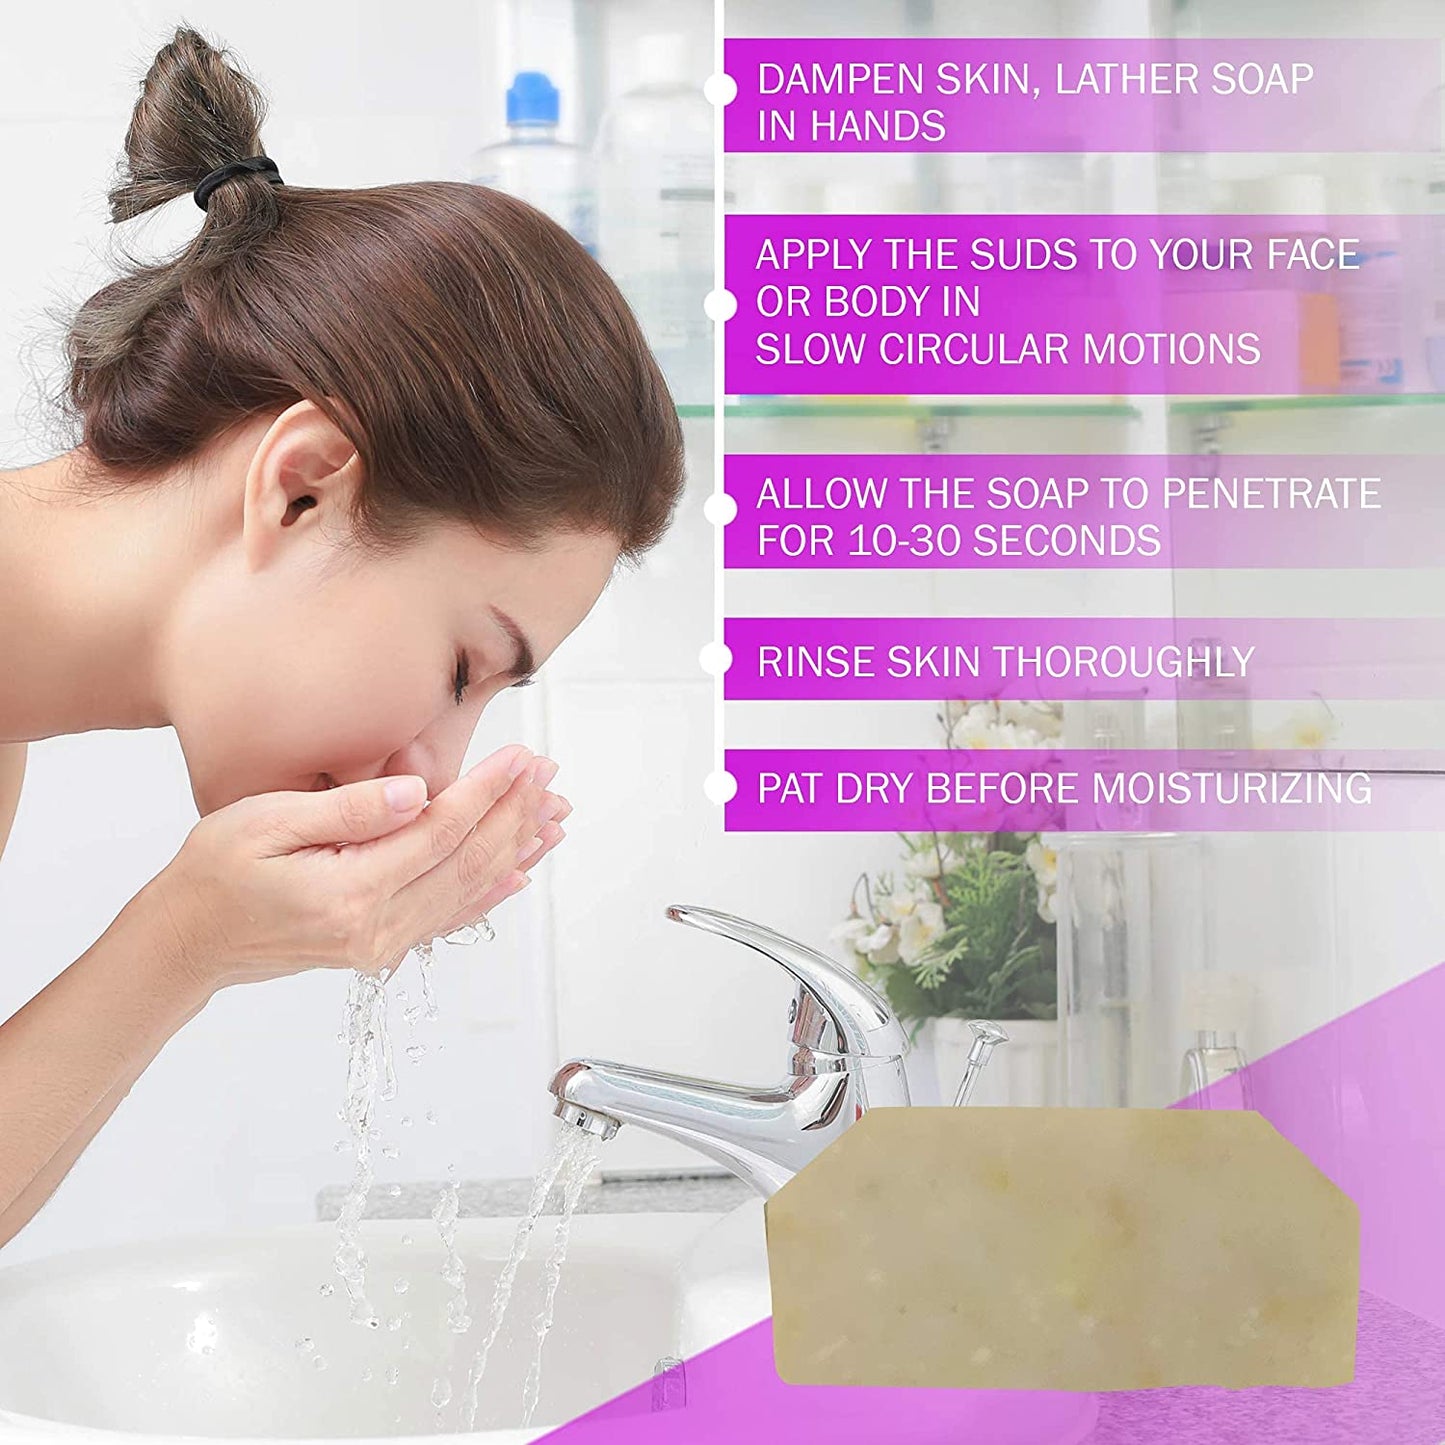 Eczema Soap